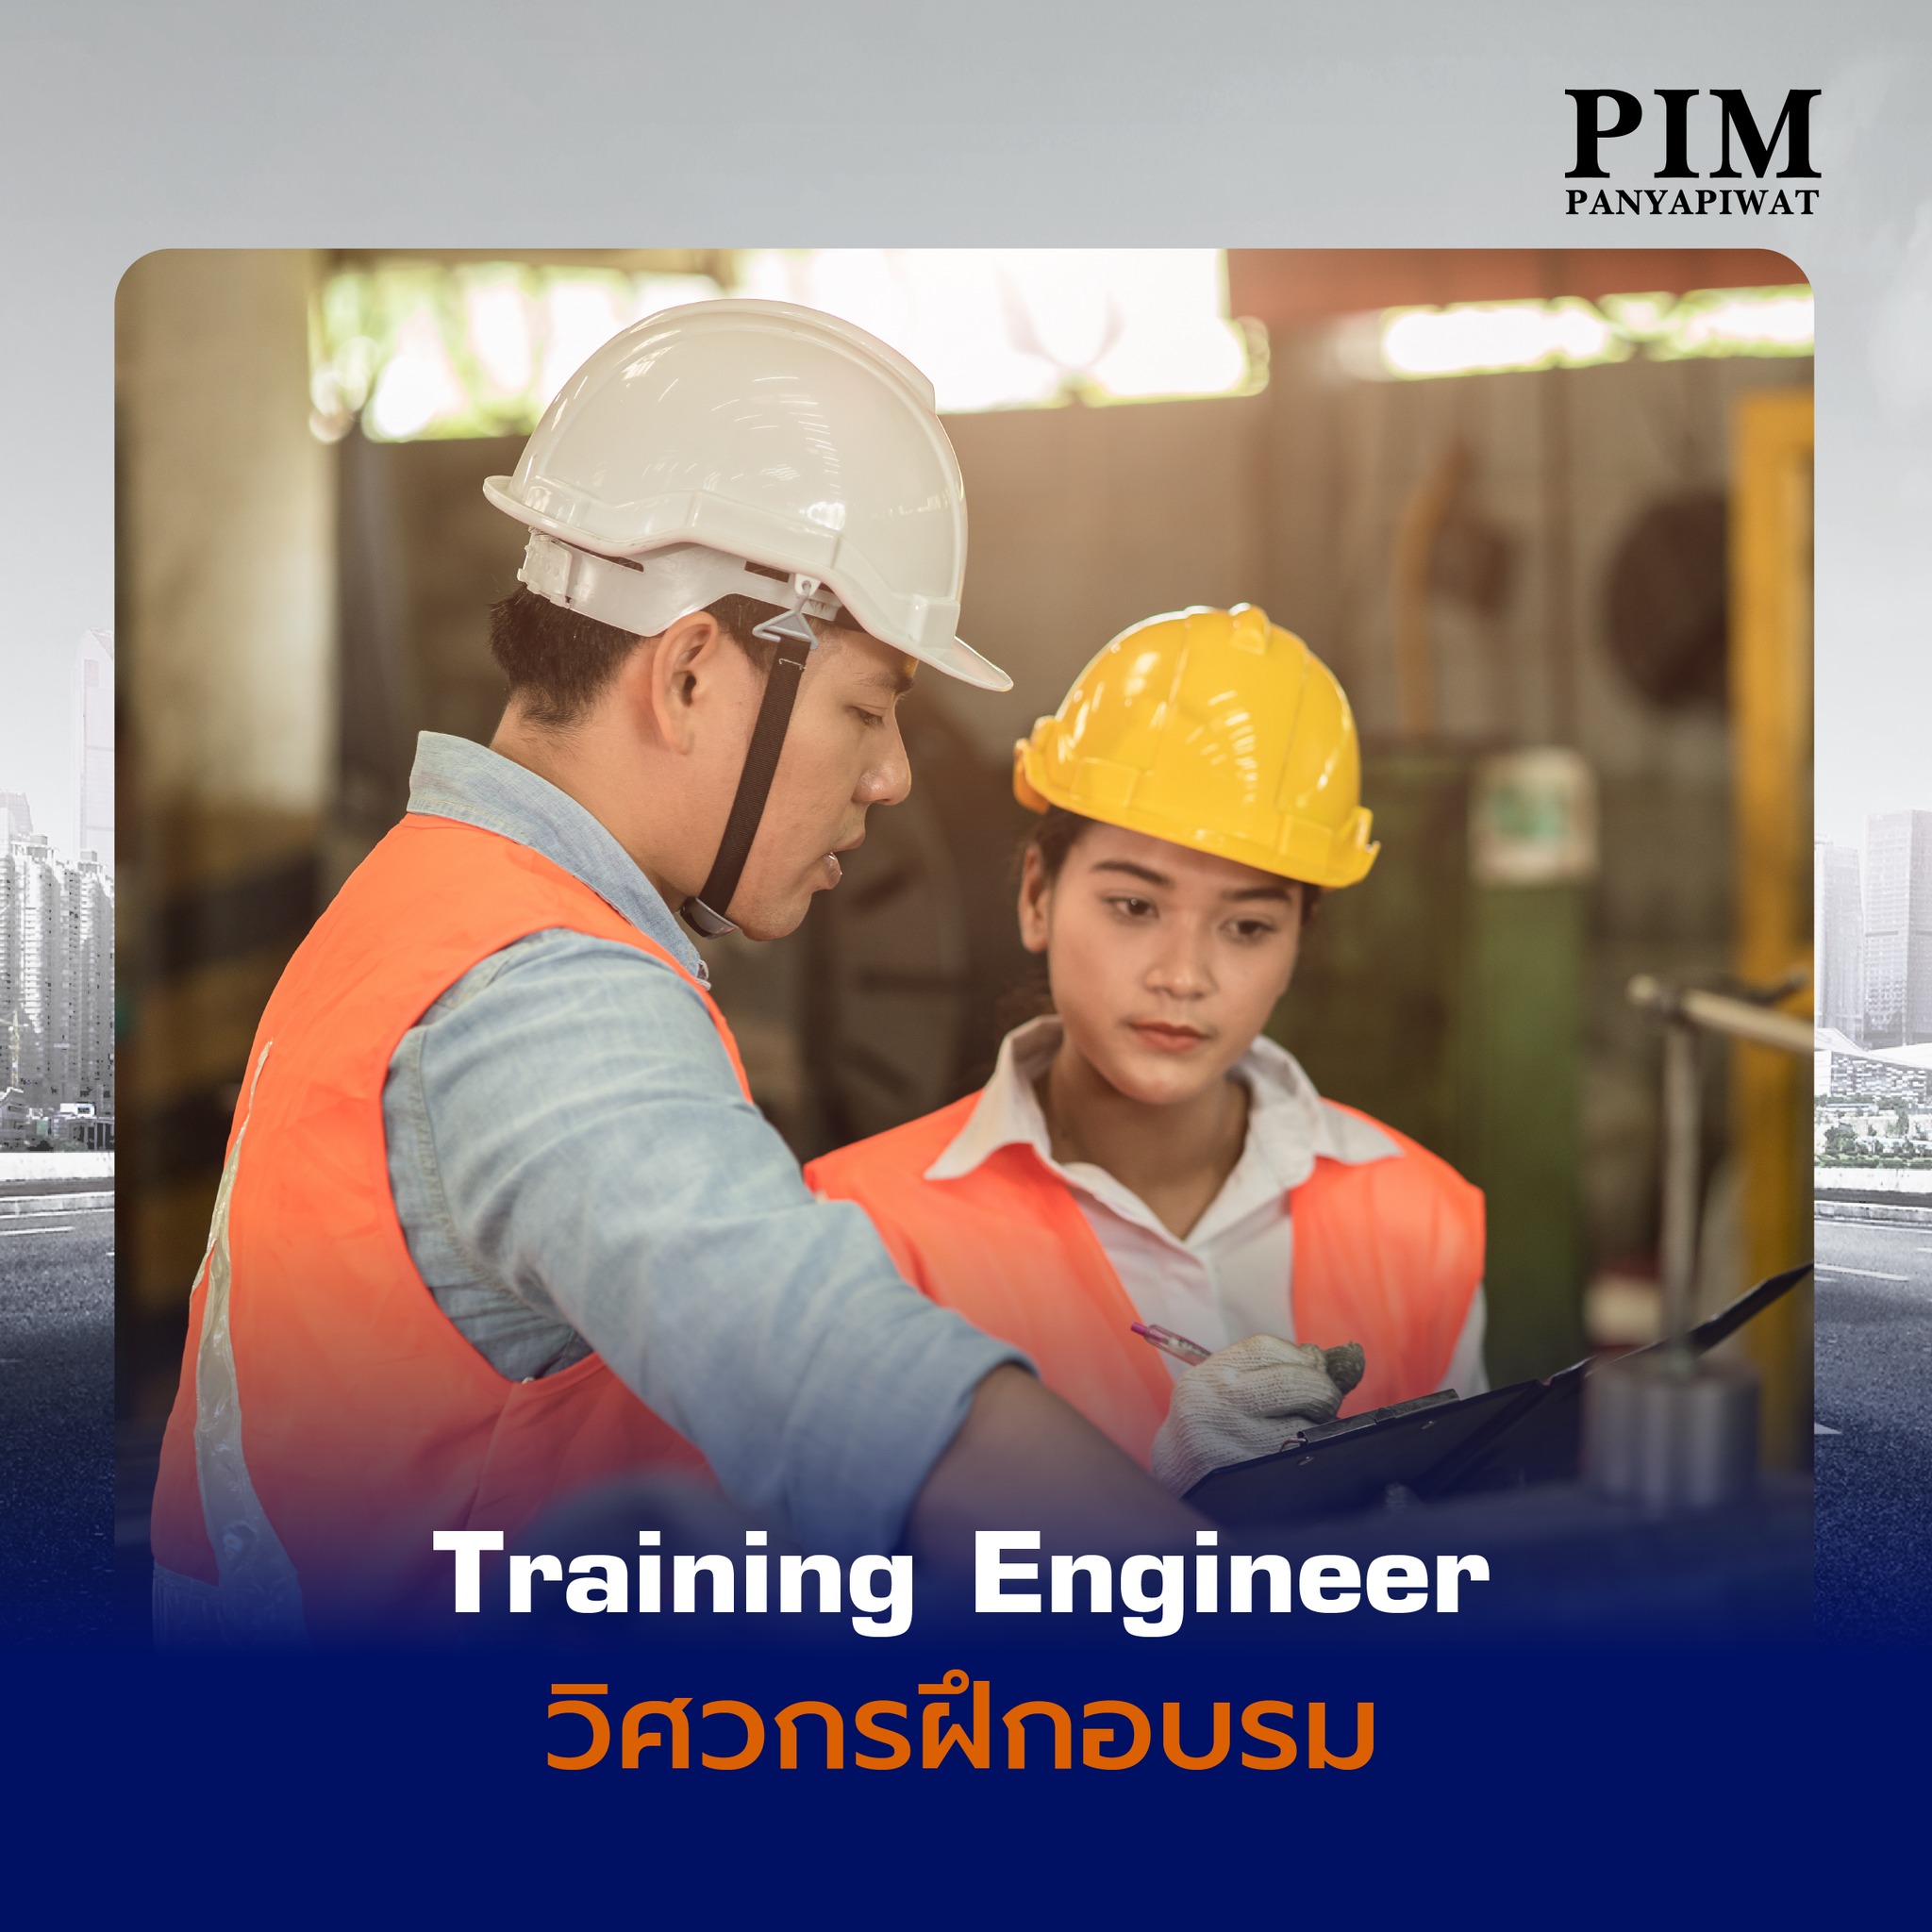 Training Engineer วิศวกรฝึกอบรม